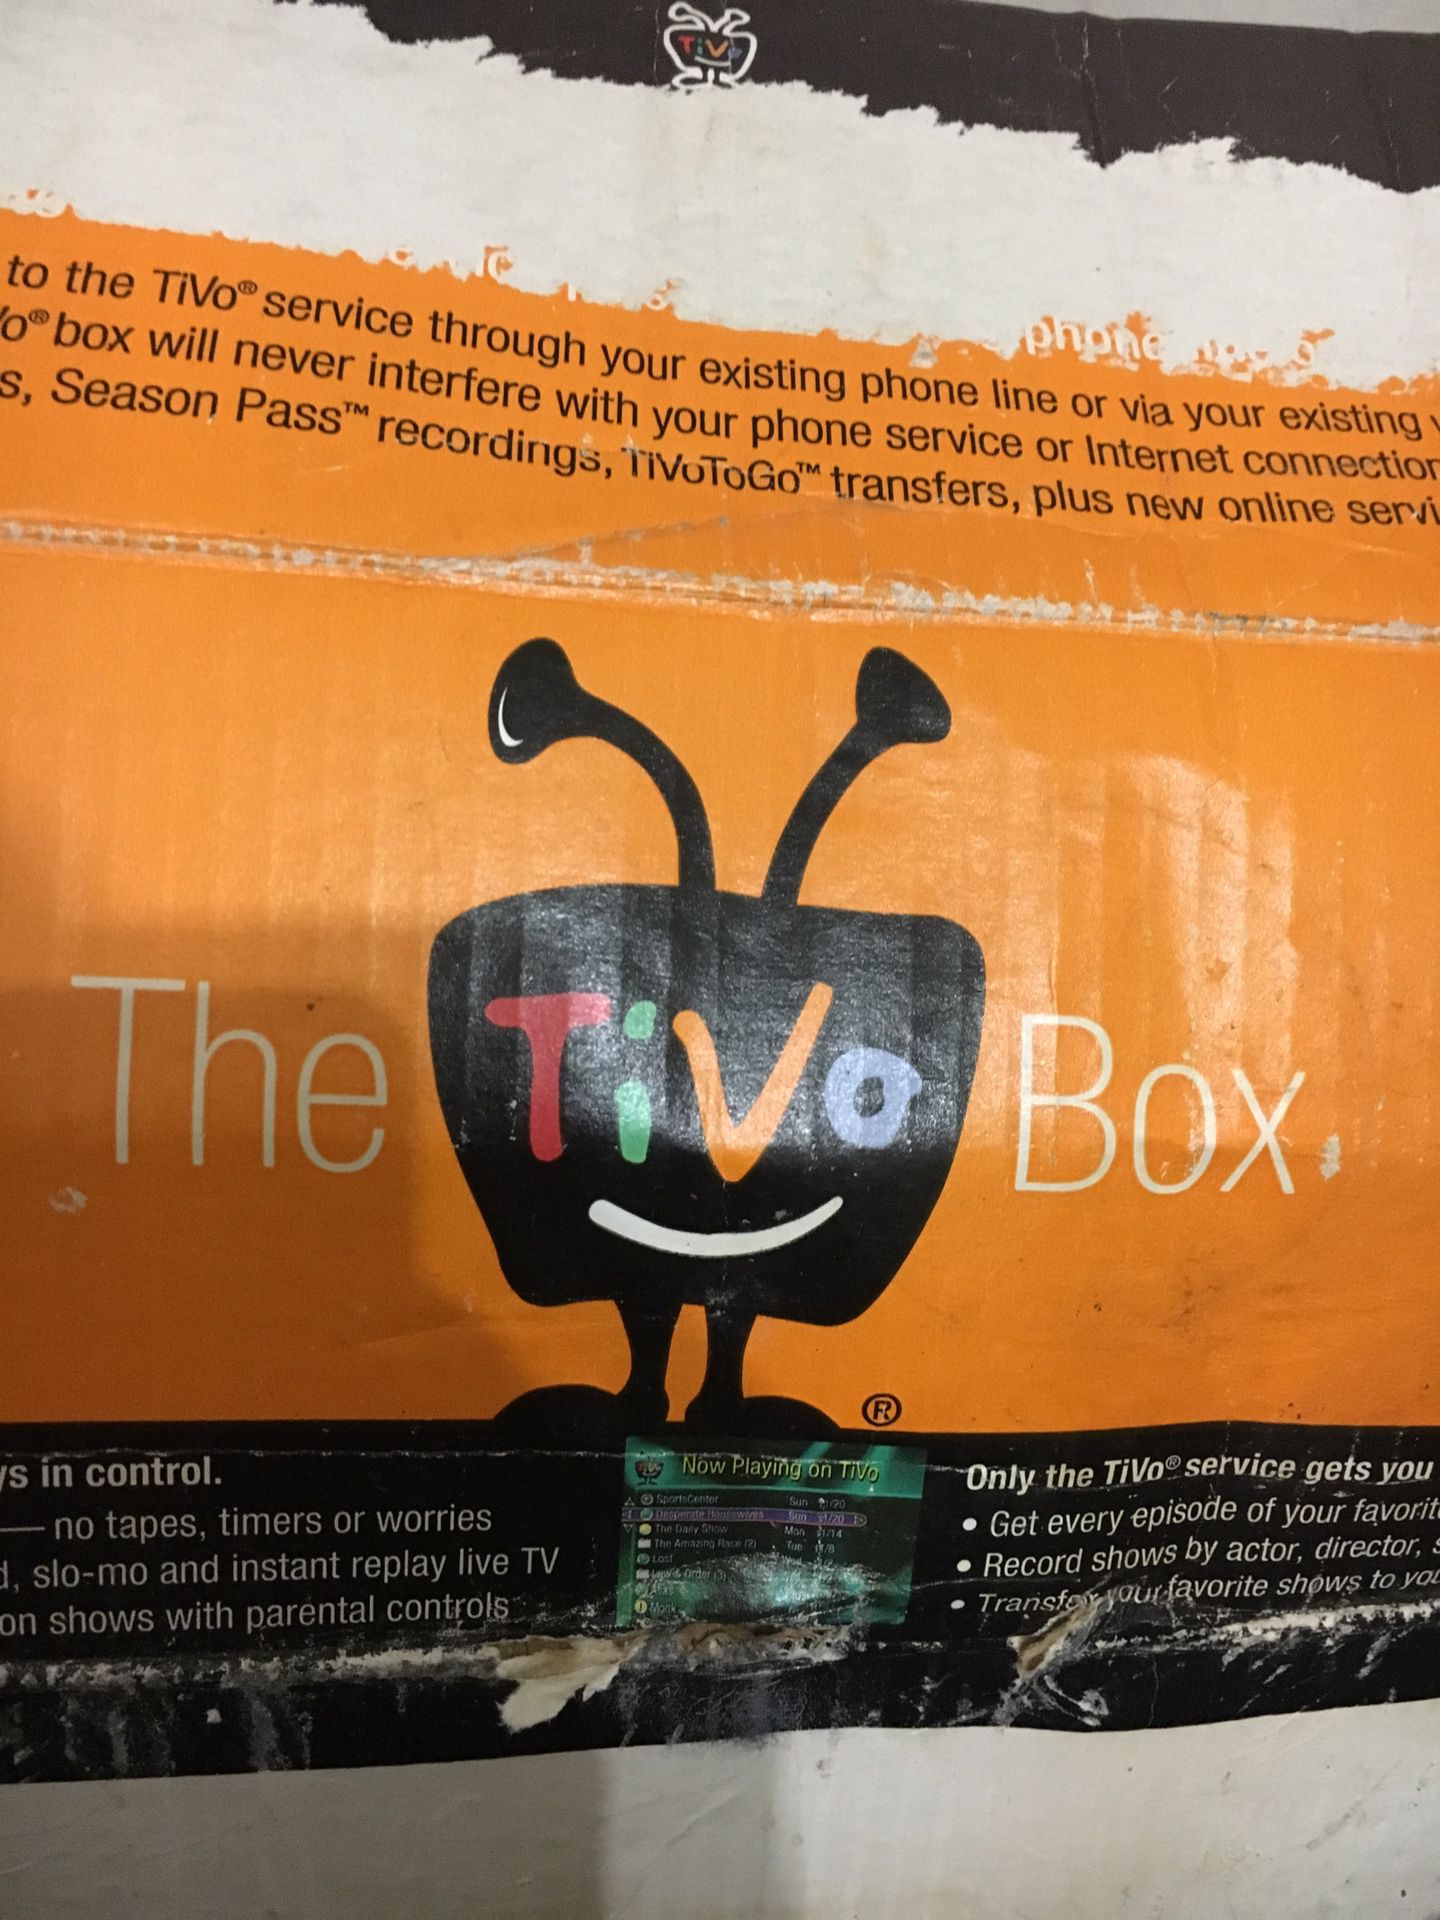 The TiVo box